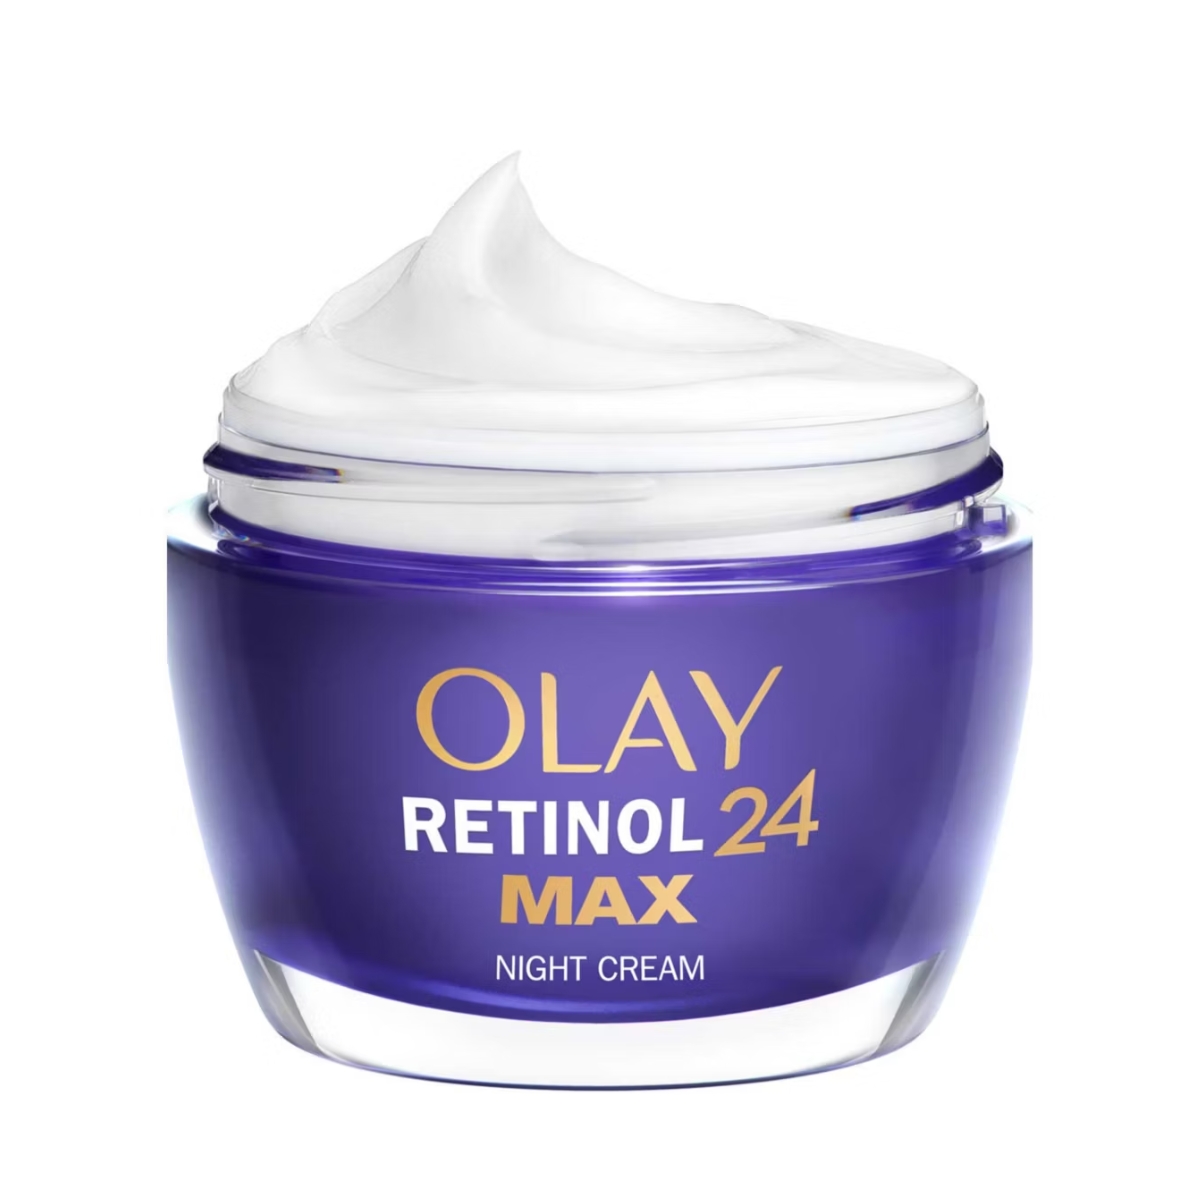 Olay Regenerist Retinol 24 Max Night Cream